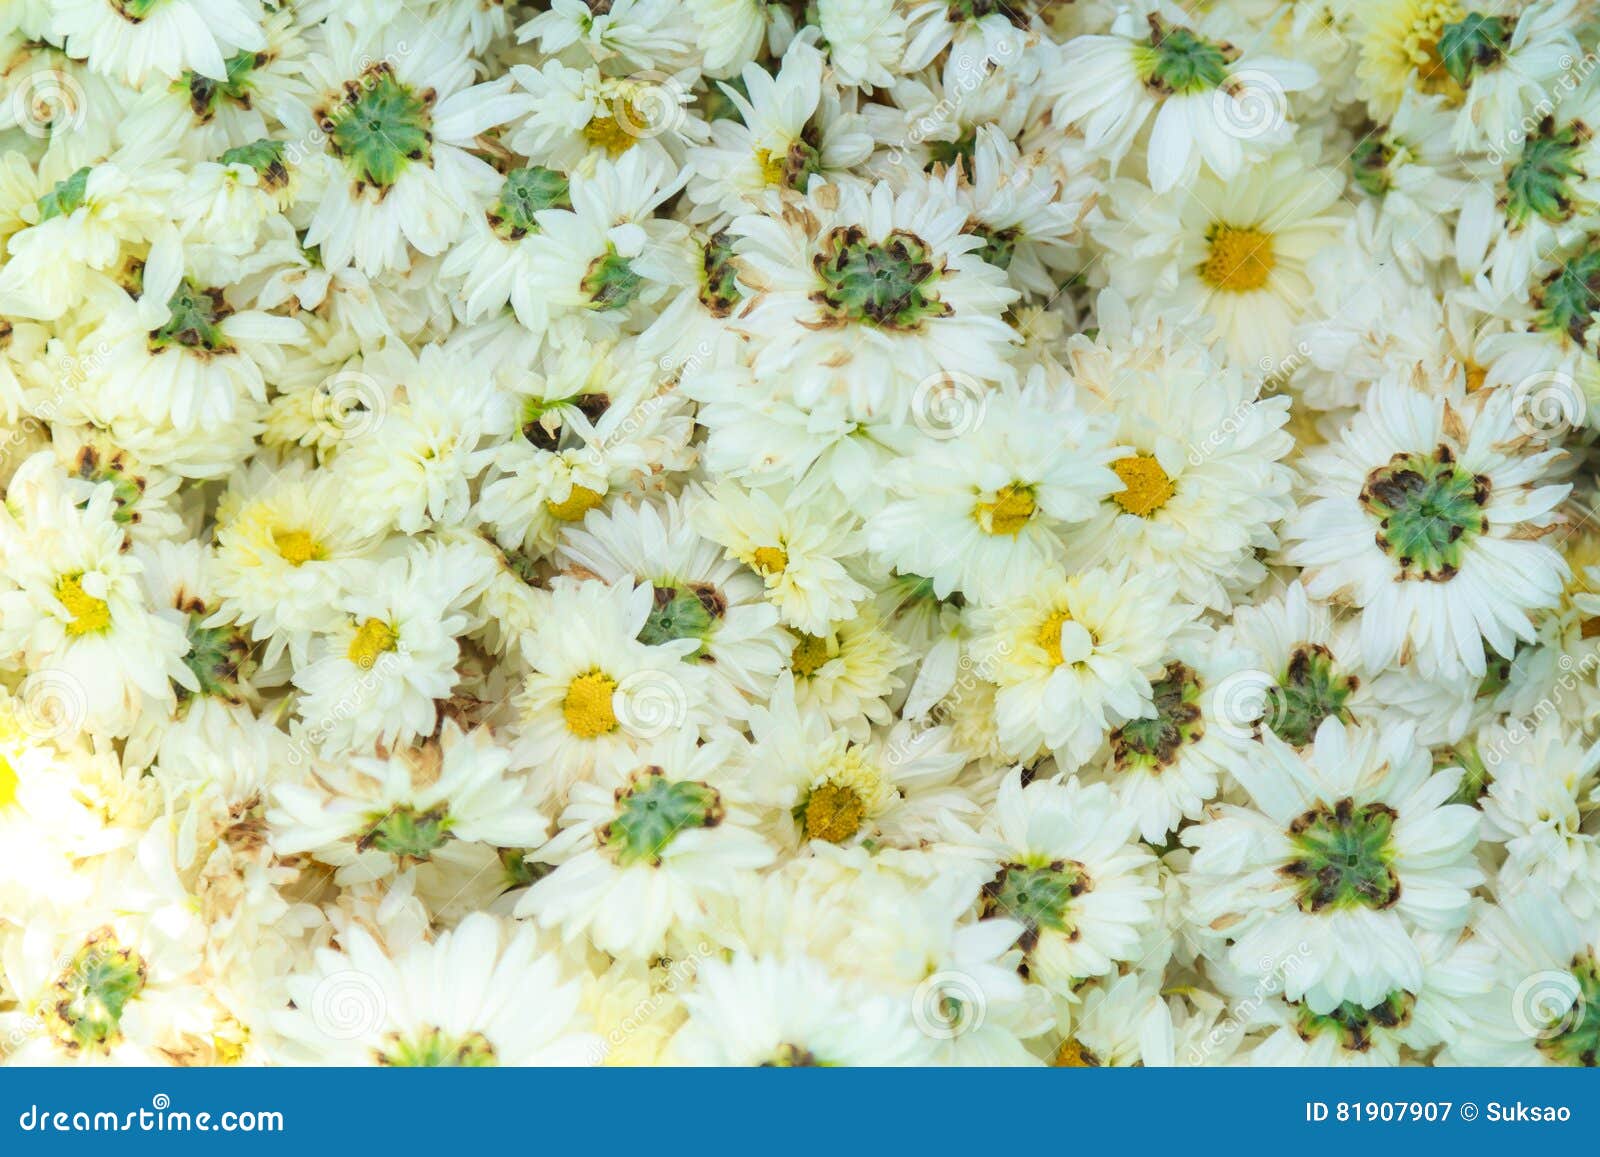 White Chrysanthemum Flower Stock Image Image Of Floral 81907907